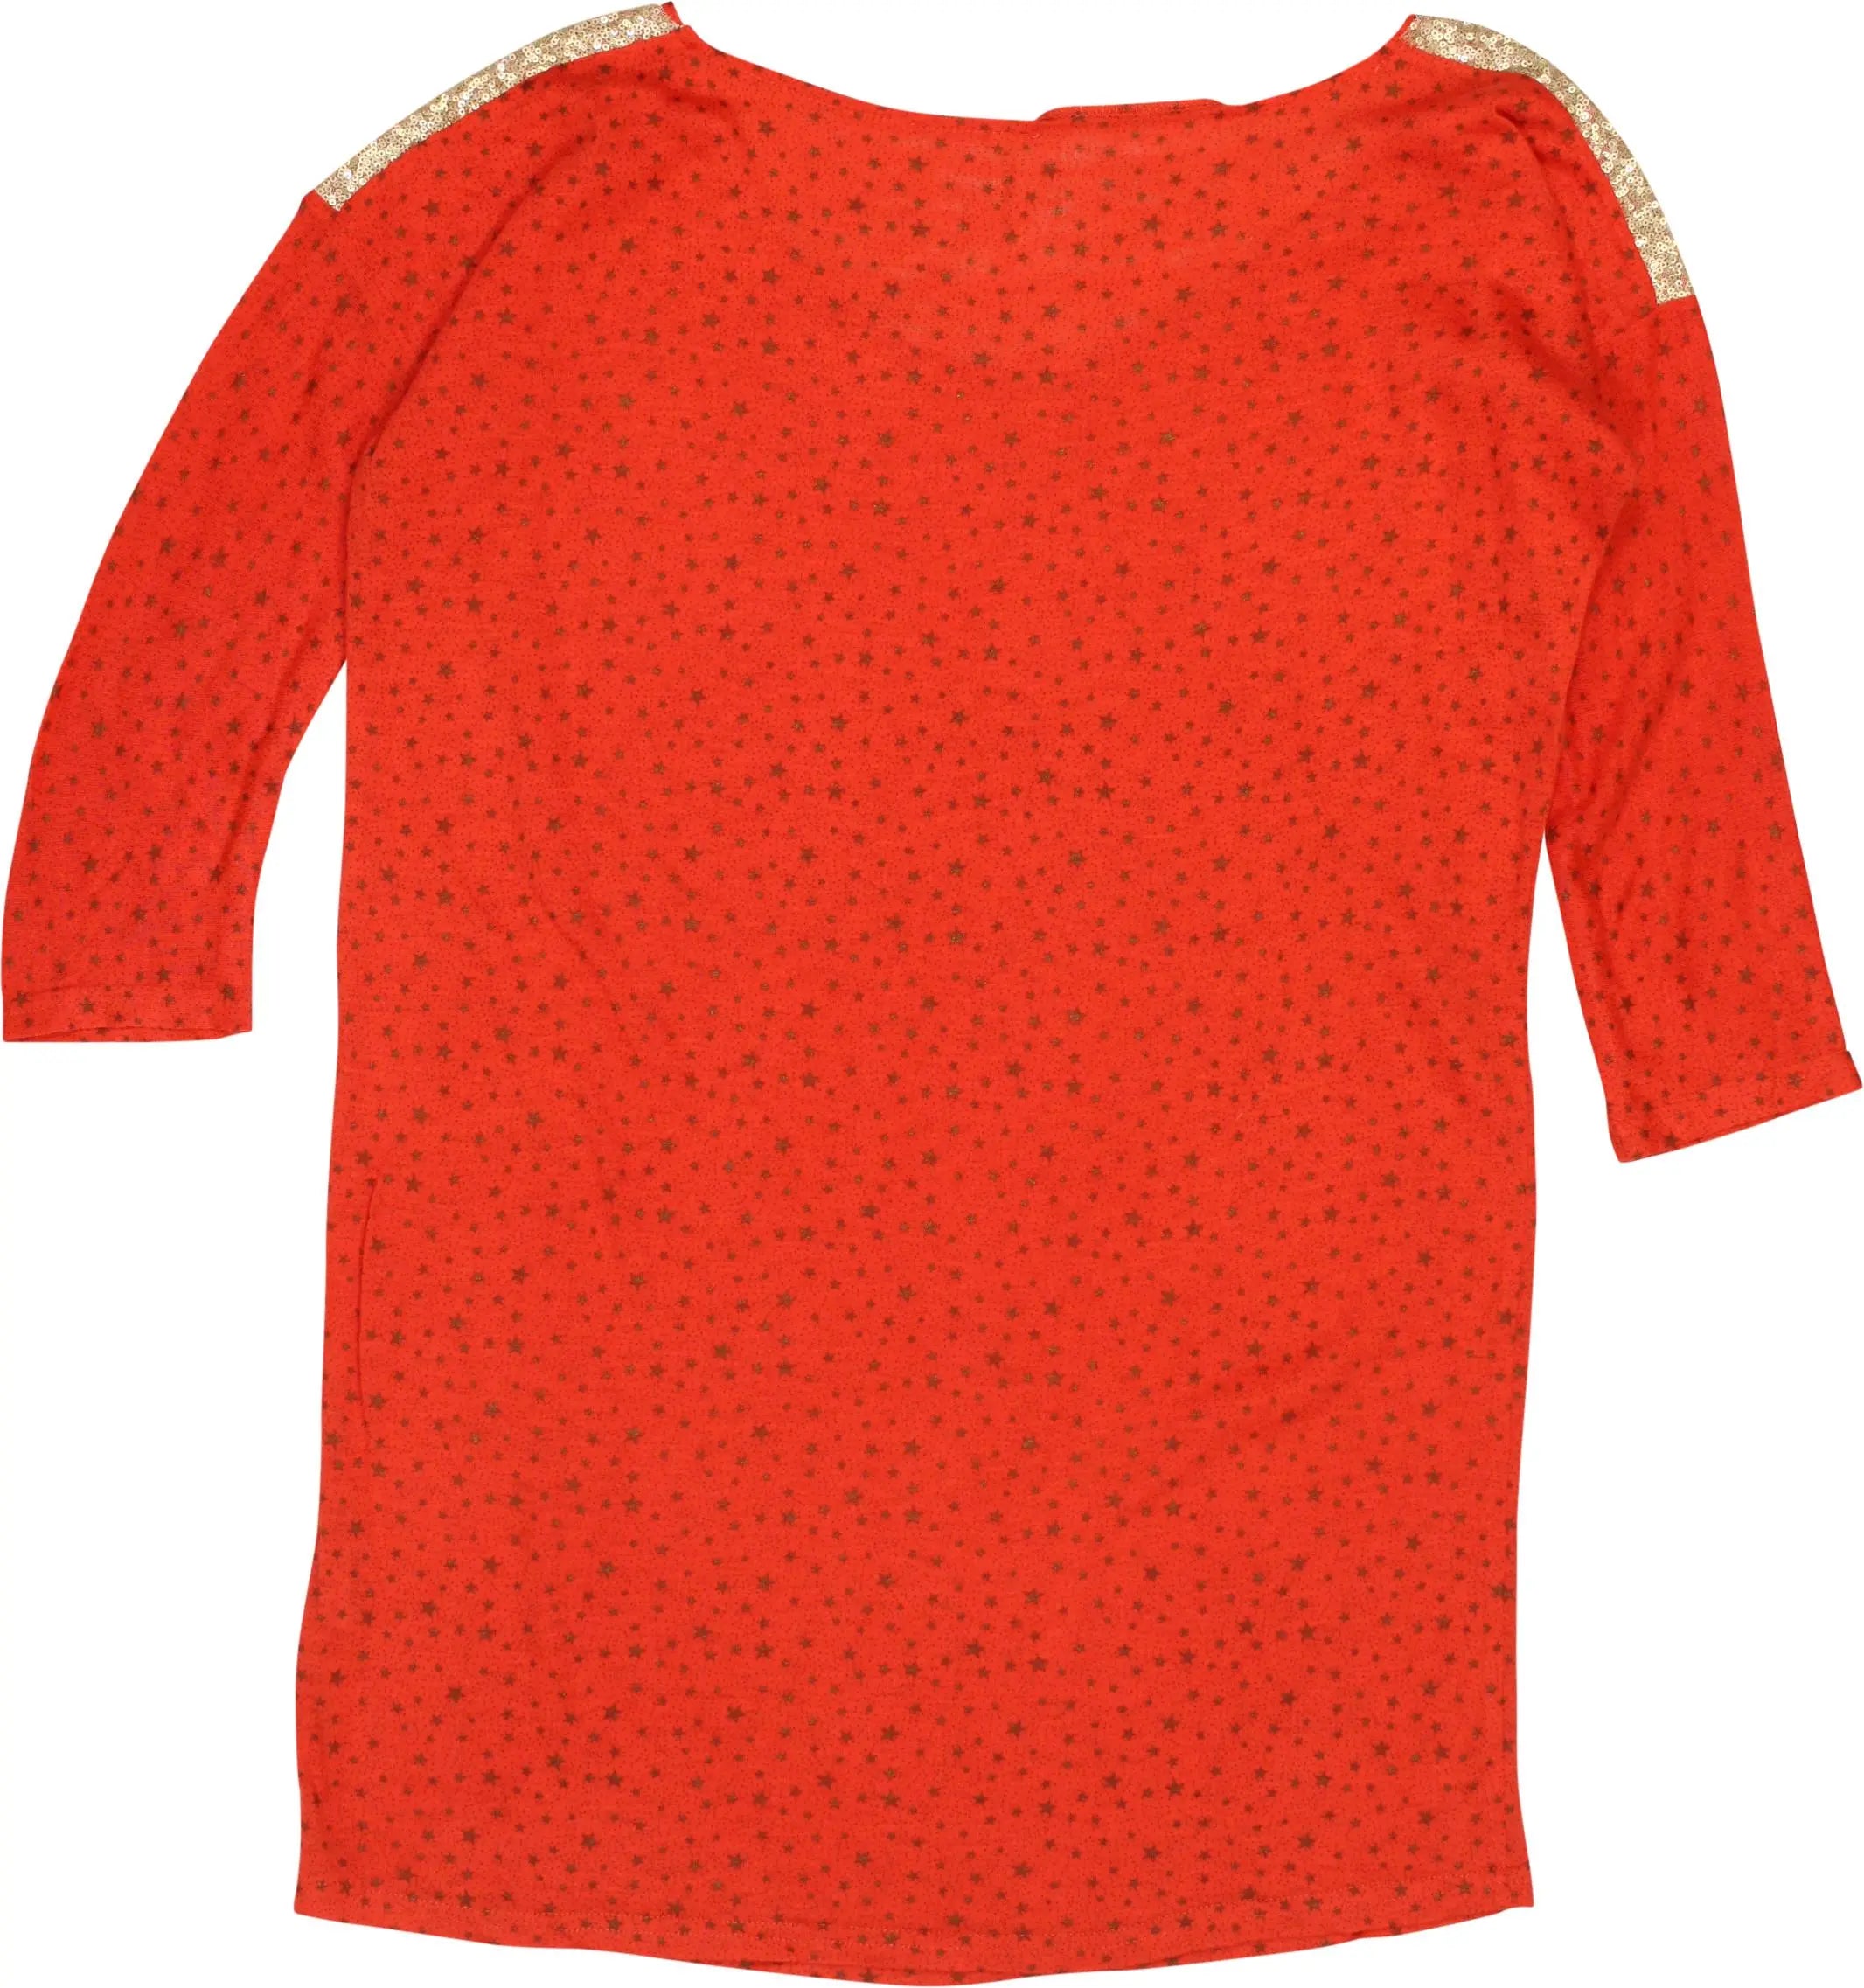 Kilibbi - Stars Dress- ThriftTale.com - Vintage and second handclothing